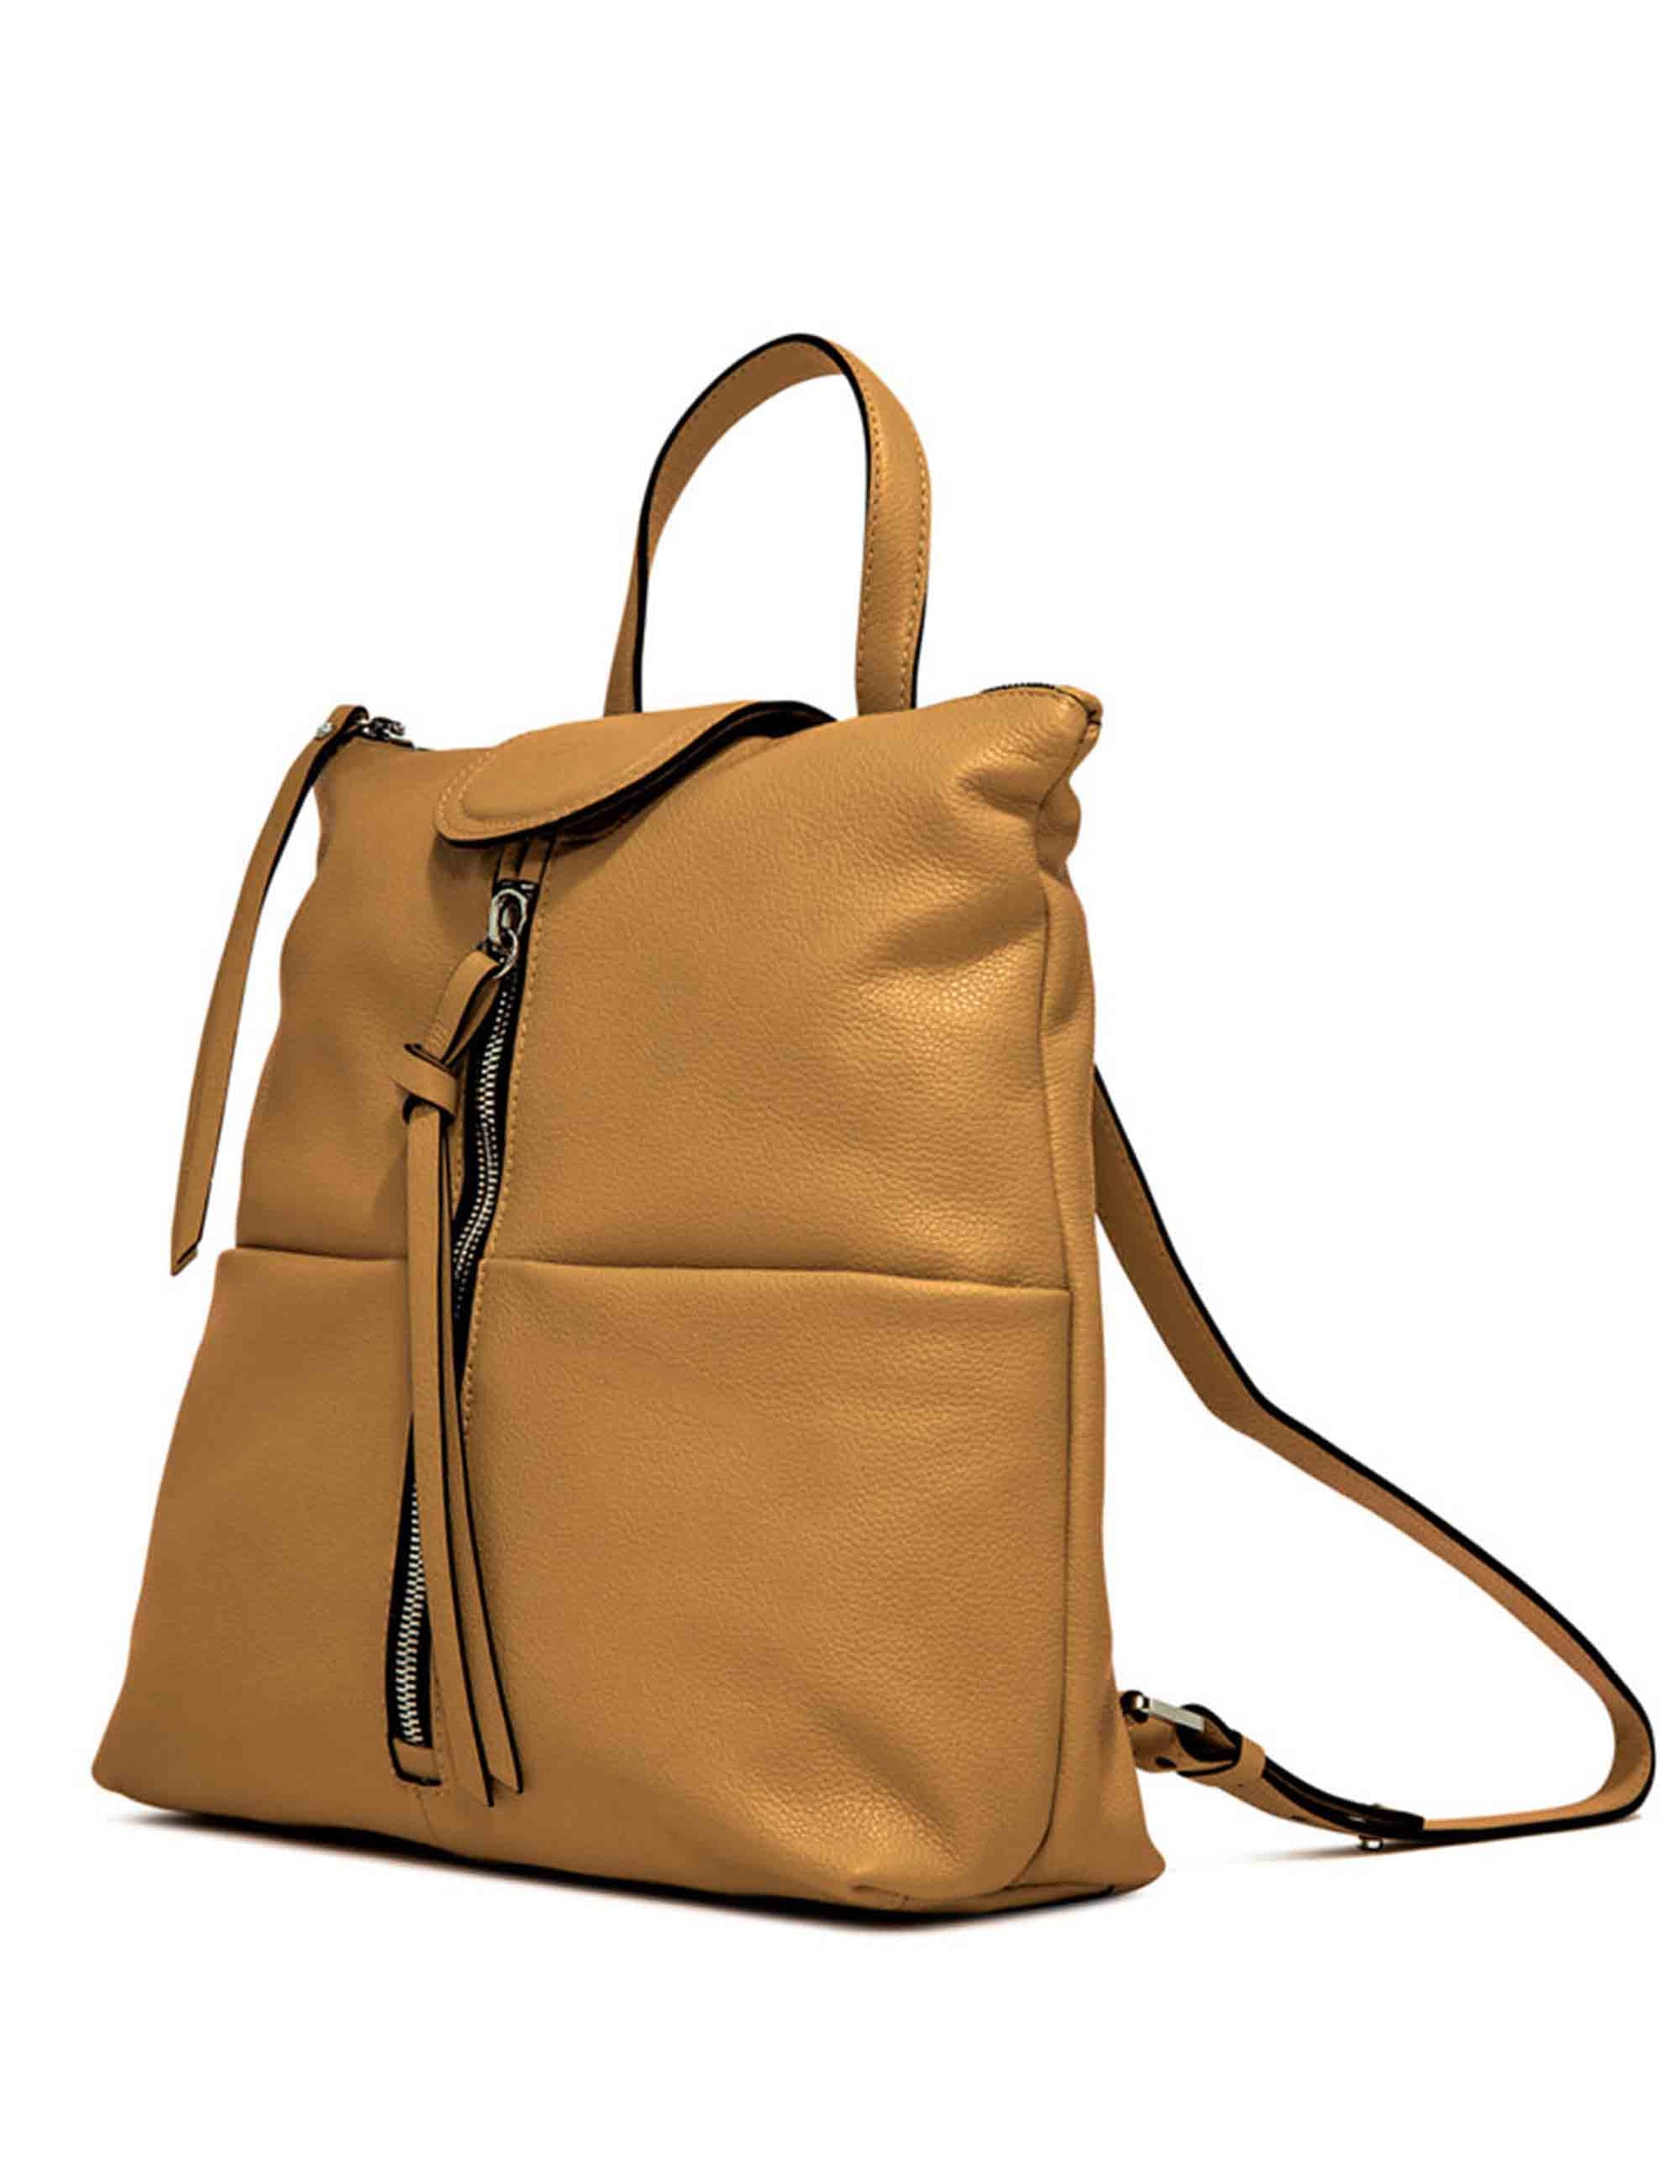 Giada women's backpacks in tan leather